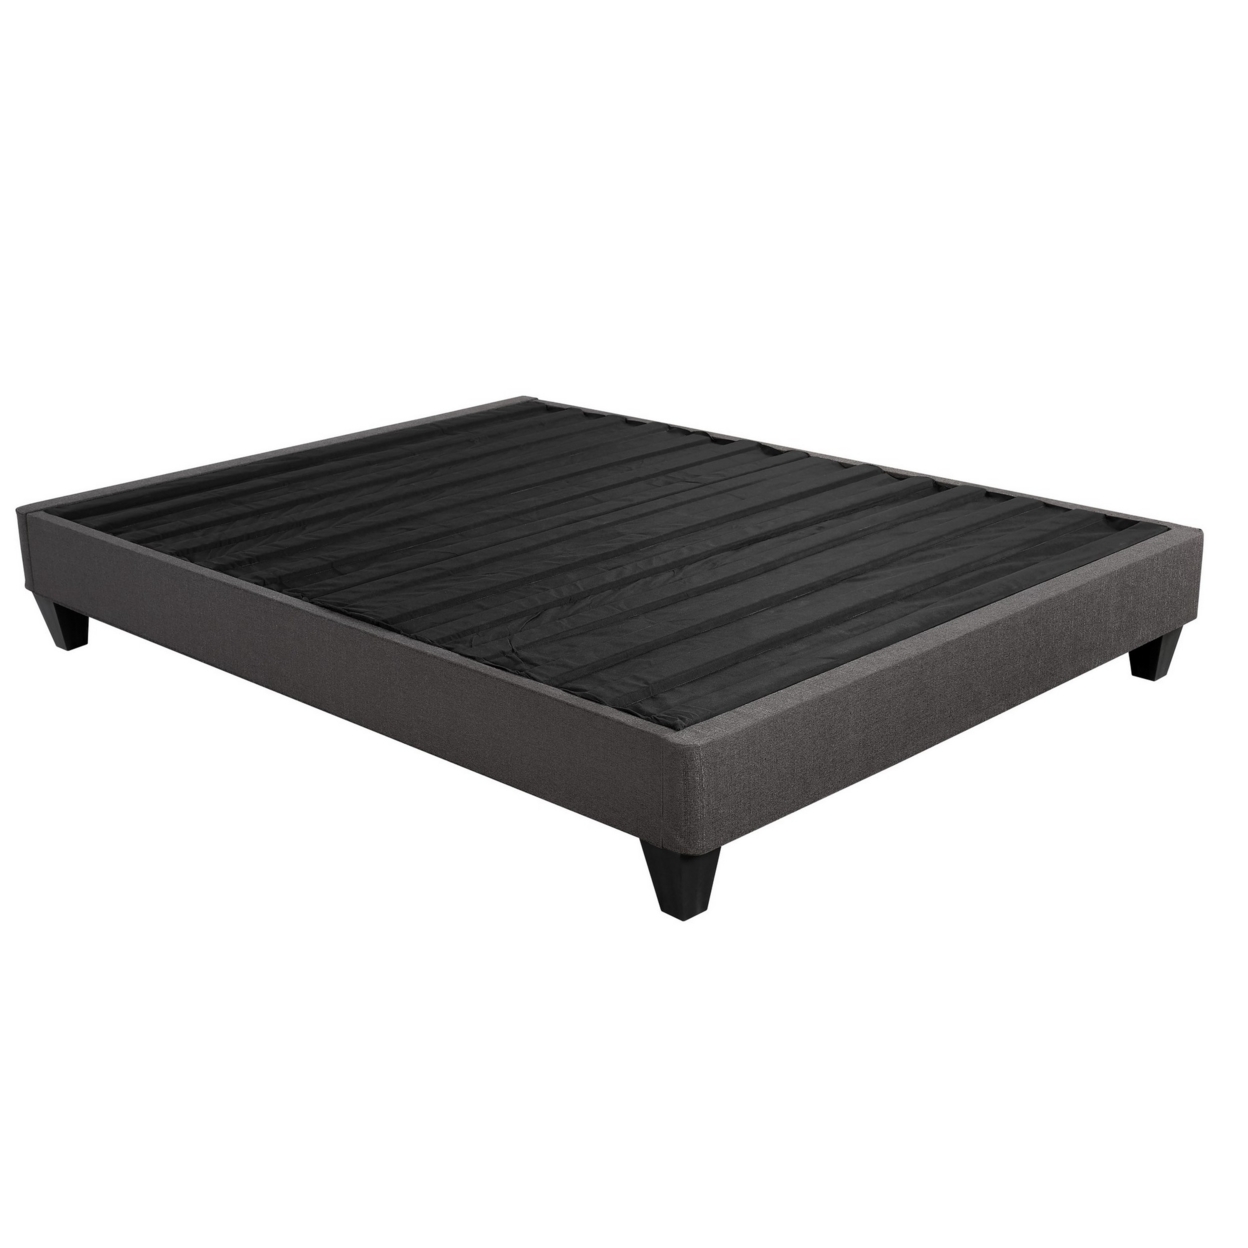 Tamy 13 Inch Full Size Platform Bed Frame, Wood Base, Dark Gray Linen- Saltoro Sherpi